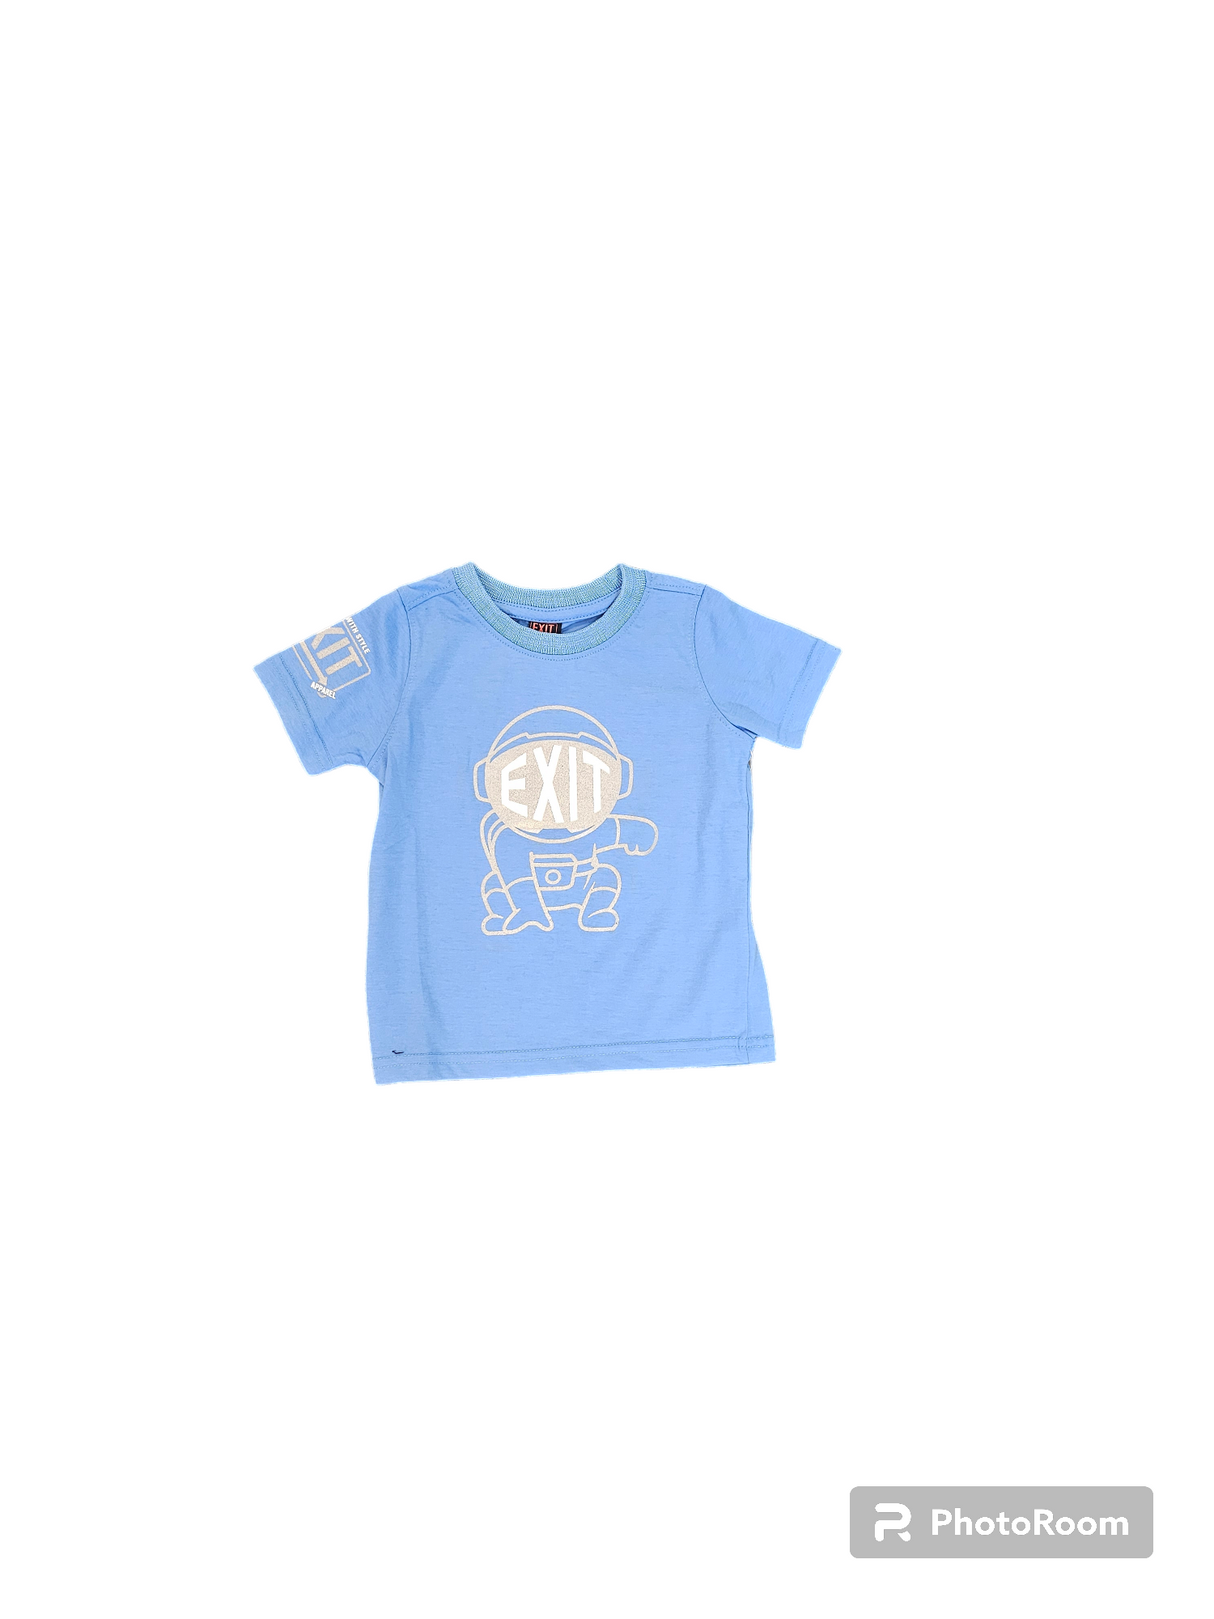 Exit - Kids T Shirt- Robot - Blue